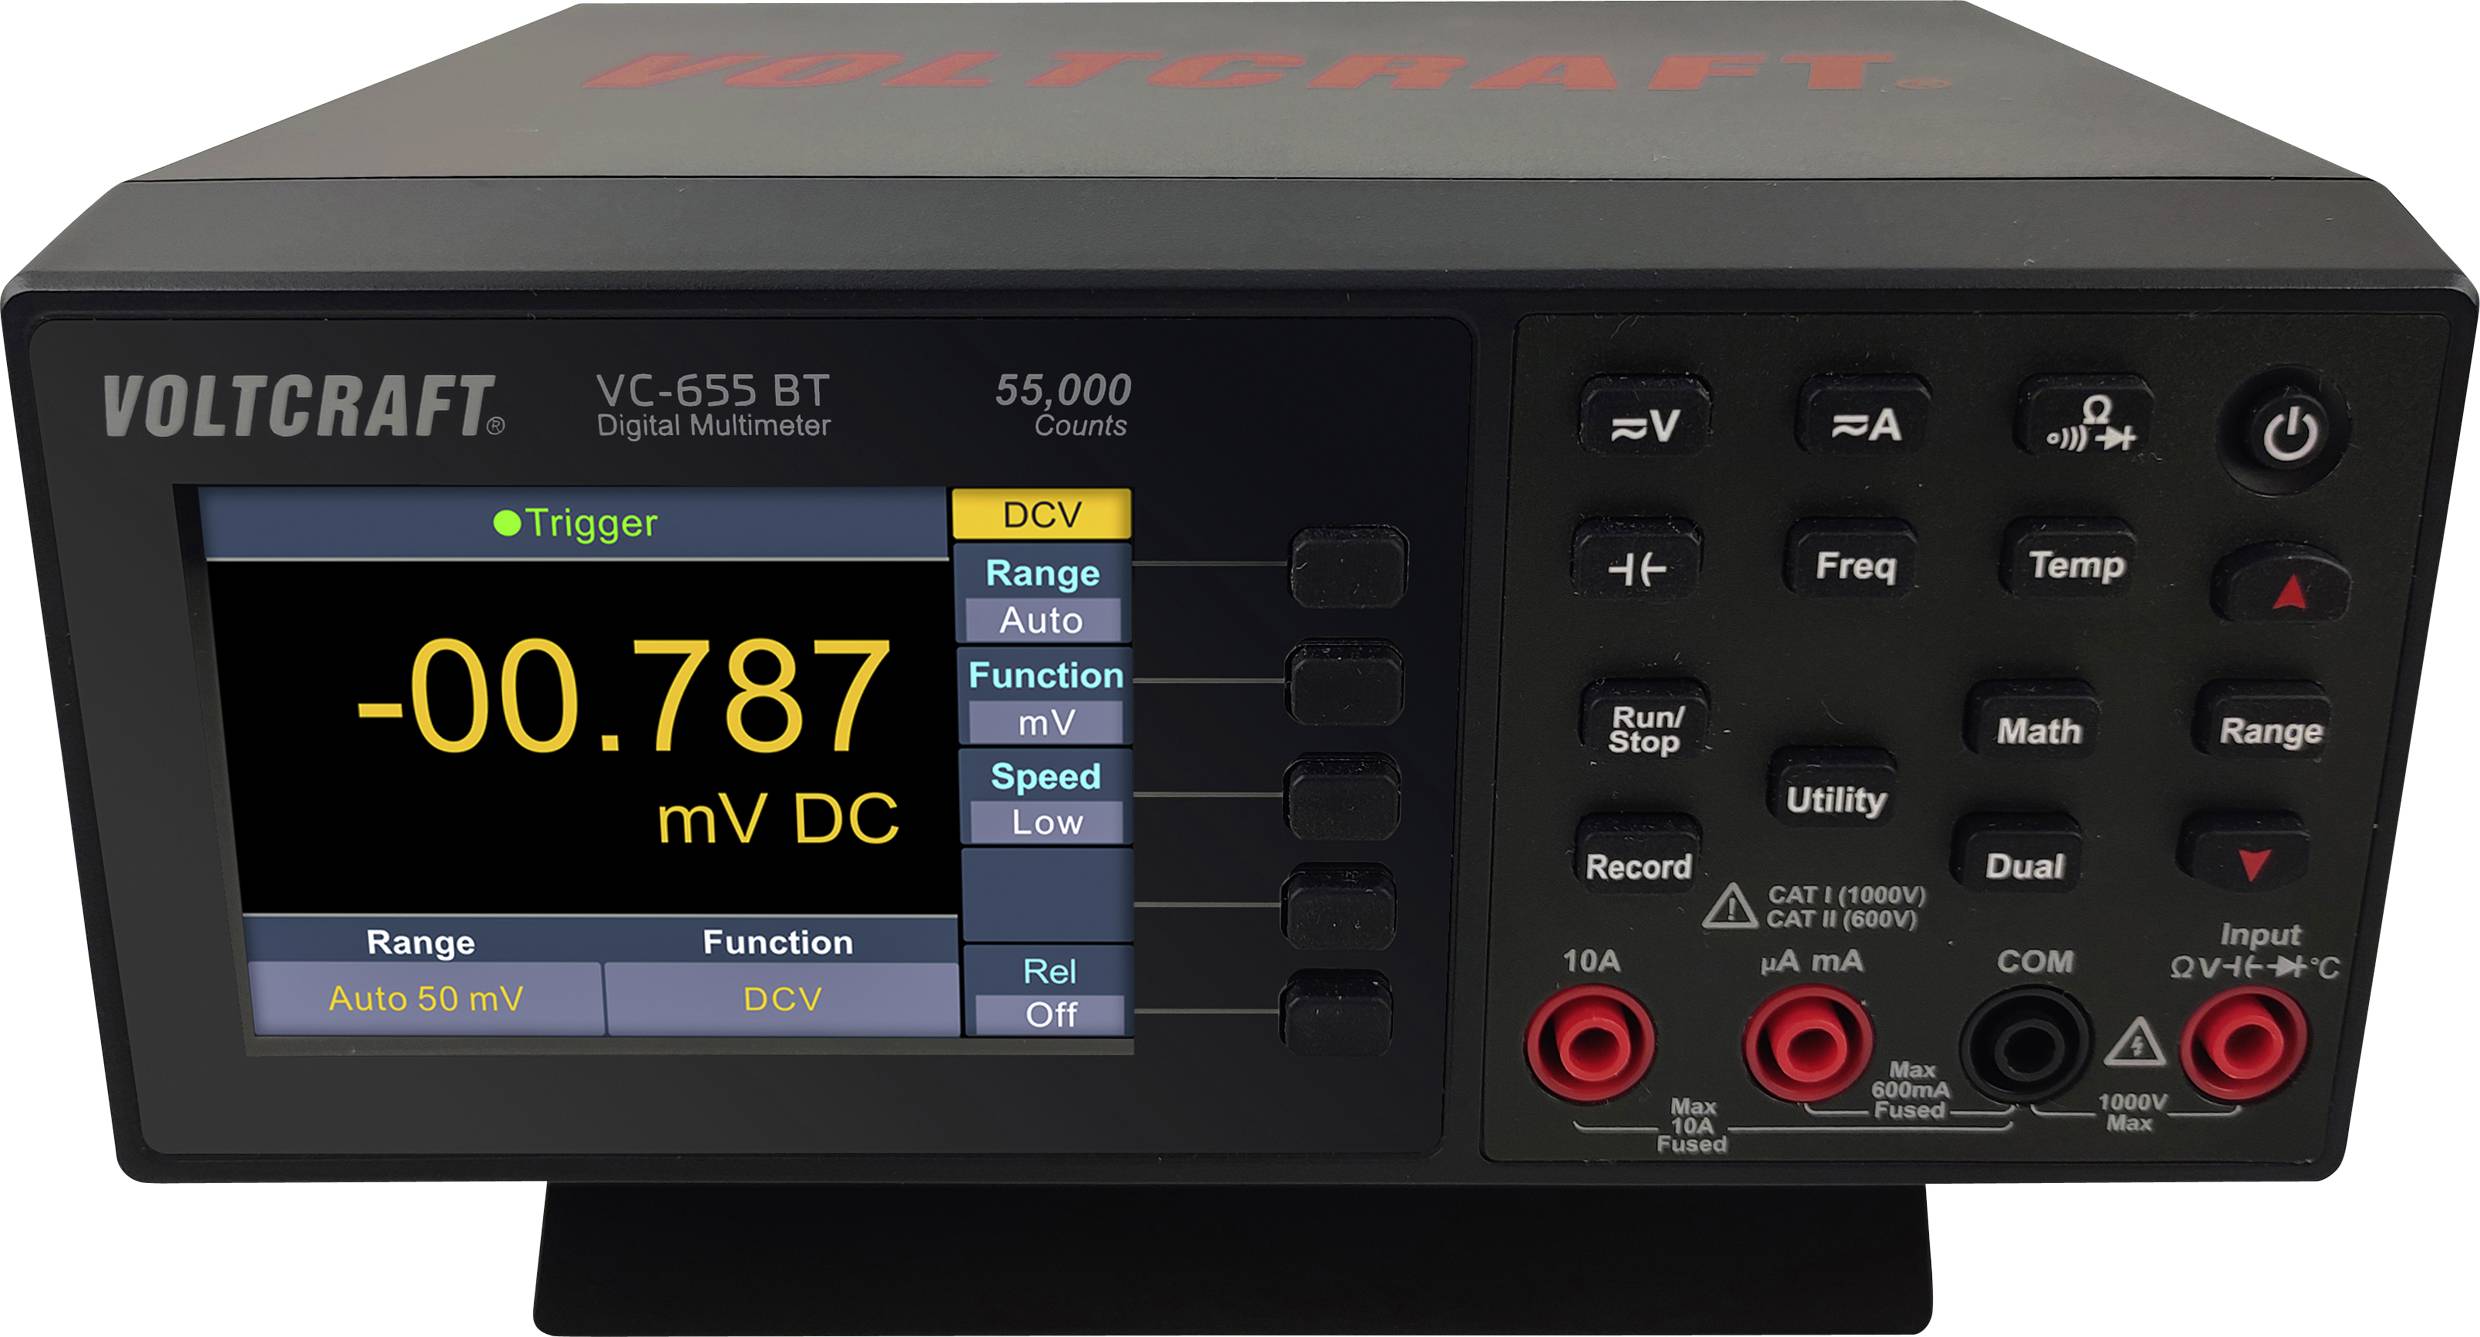 CONRAD VOLTCRAFT VC-655 BT Tisch-Multimeter digital CAT I 1000 V, CAT II 600 V Anzeige (Counts): 550